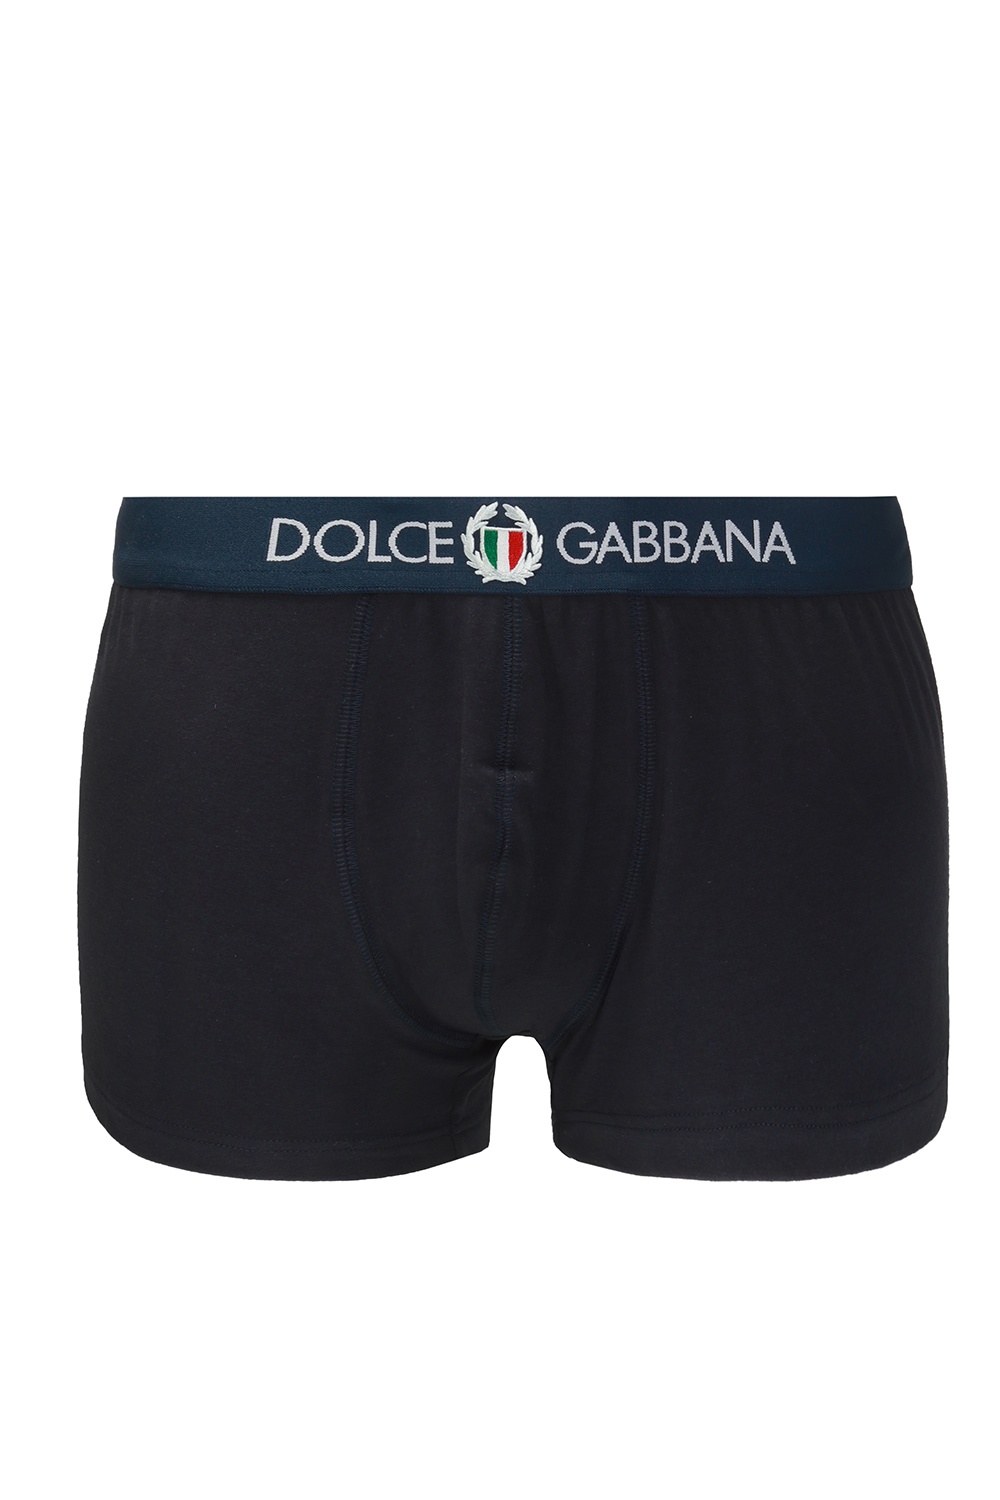 Dolce & Gabbana feather-trim t Logo-appliqued boxers